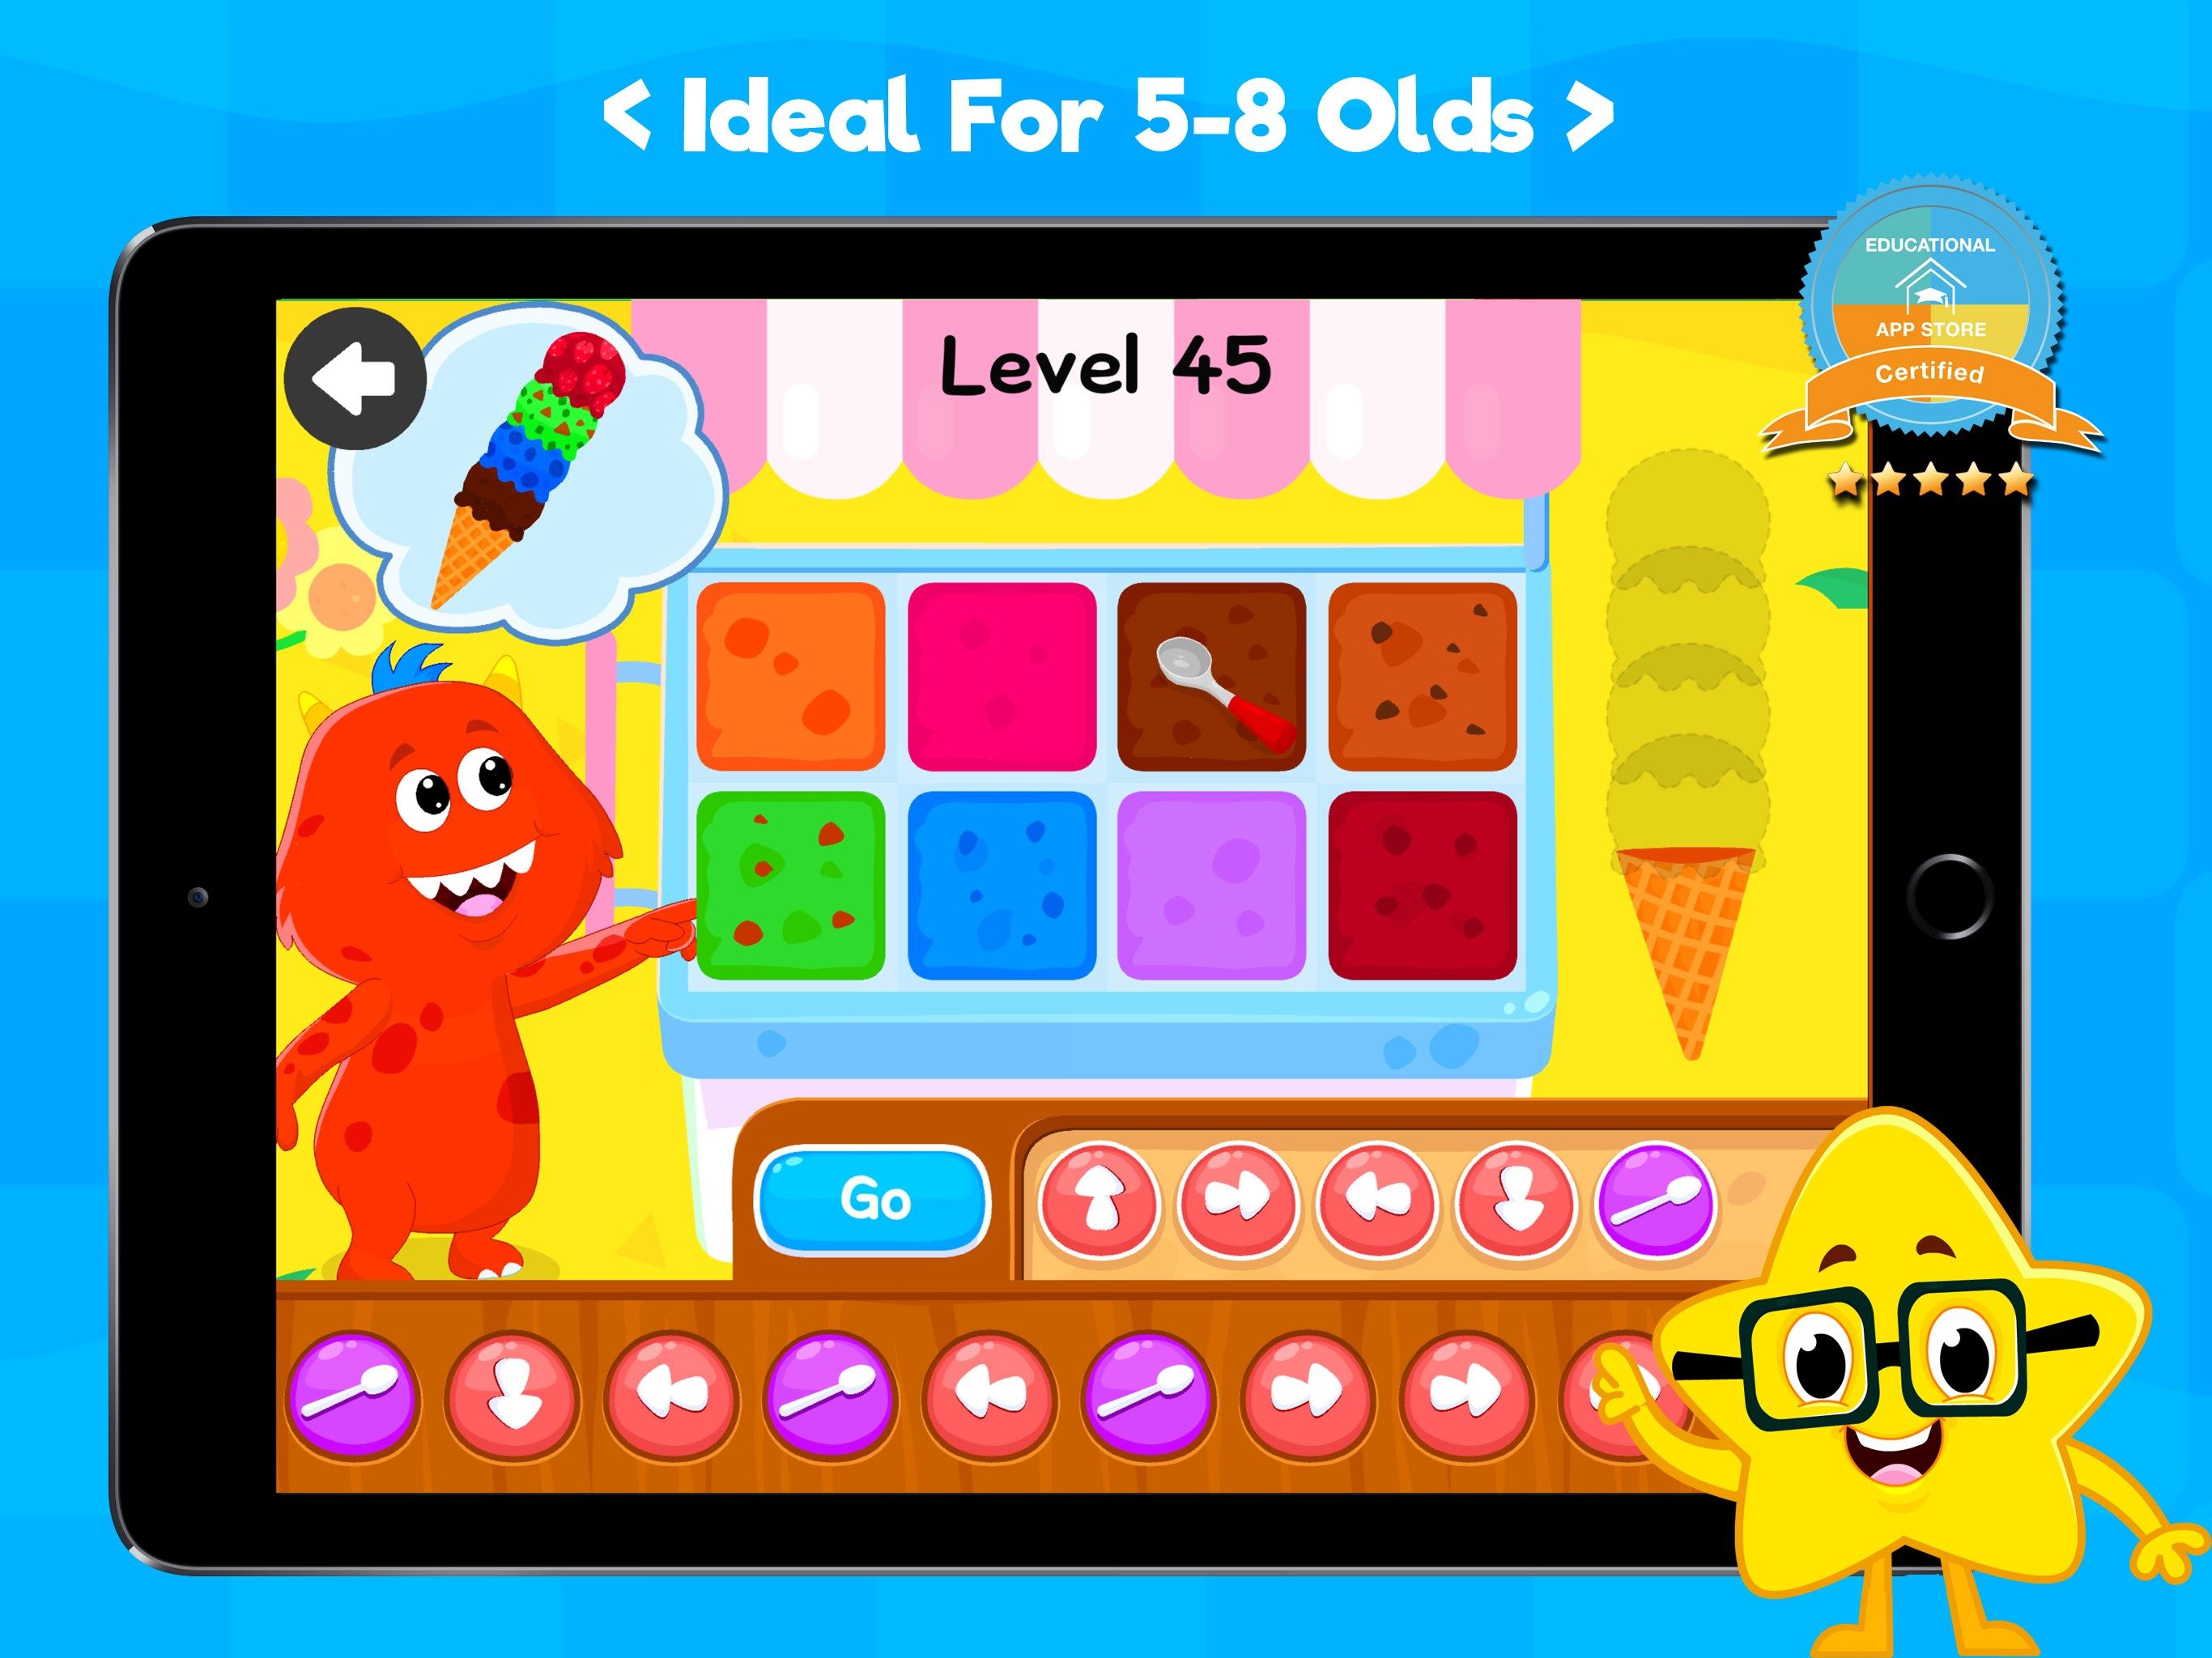 Kidlo Coding Games For Kids